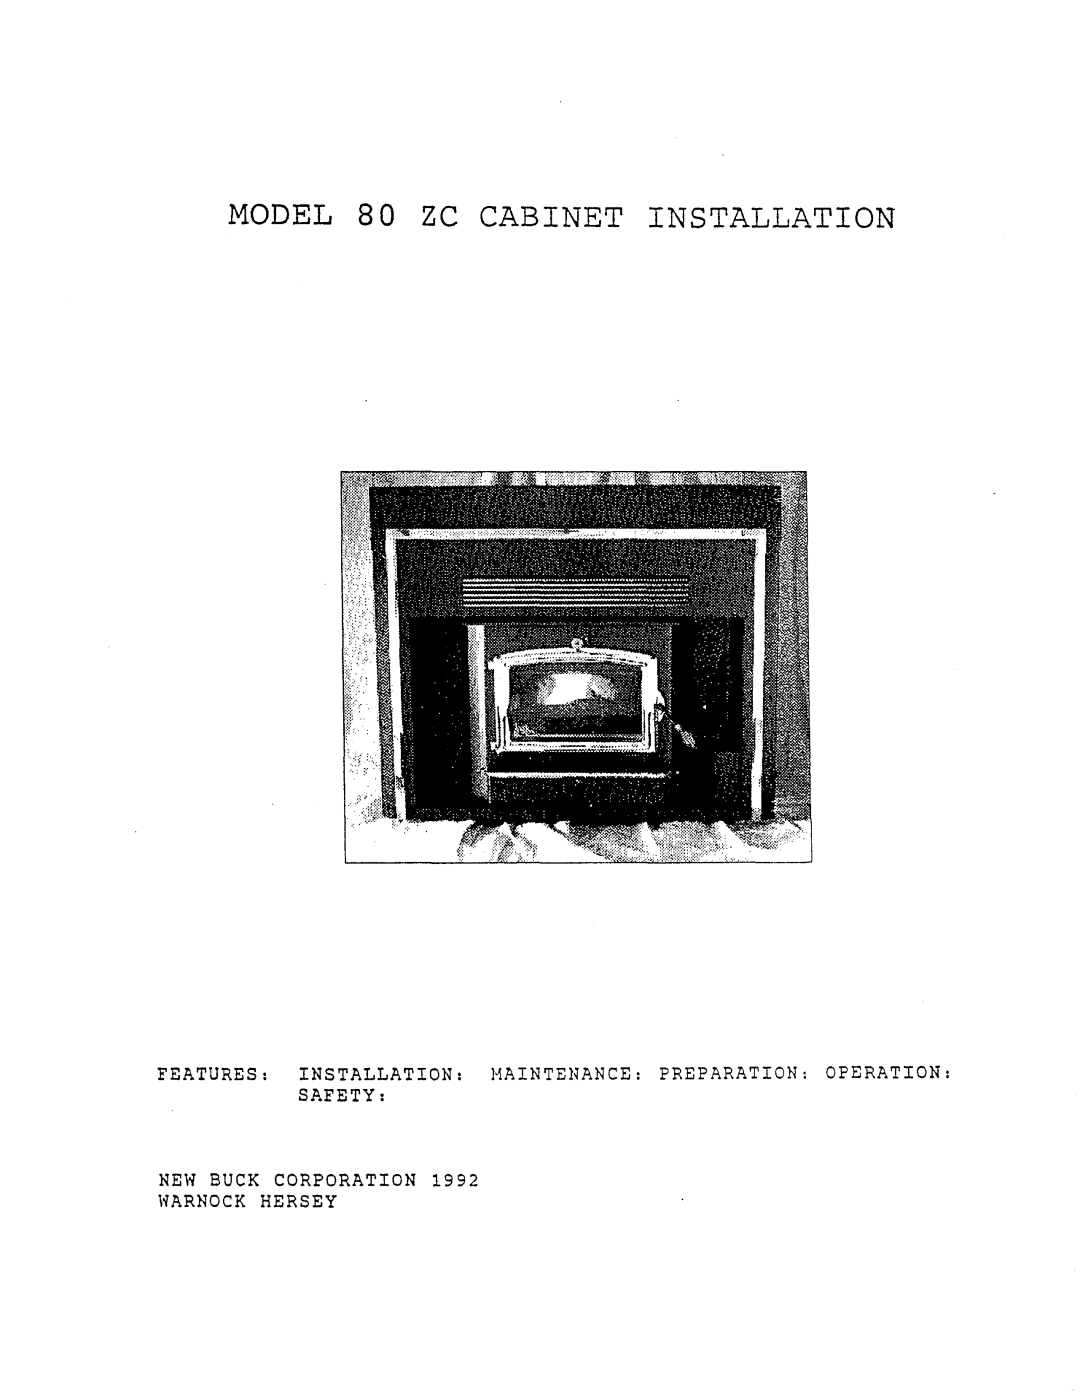 New Buck Corporation 80ZC manual MODEL 80 ZC CABINET INSTALLATION, New Buck Corporation Narnock Hersey 